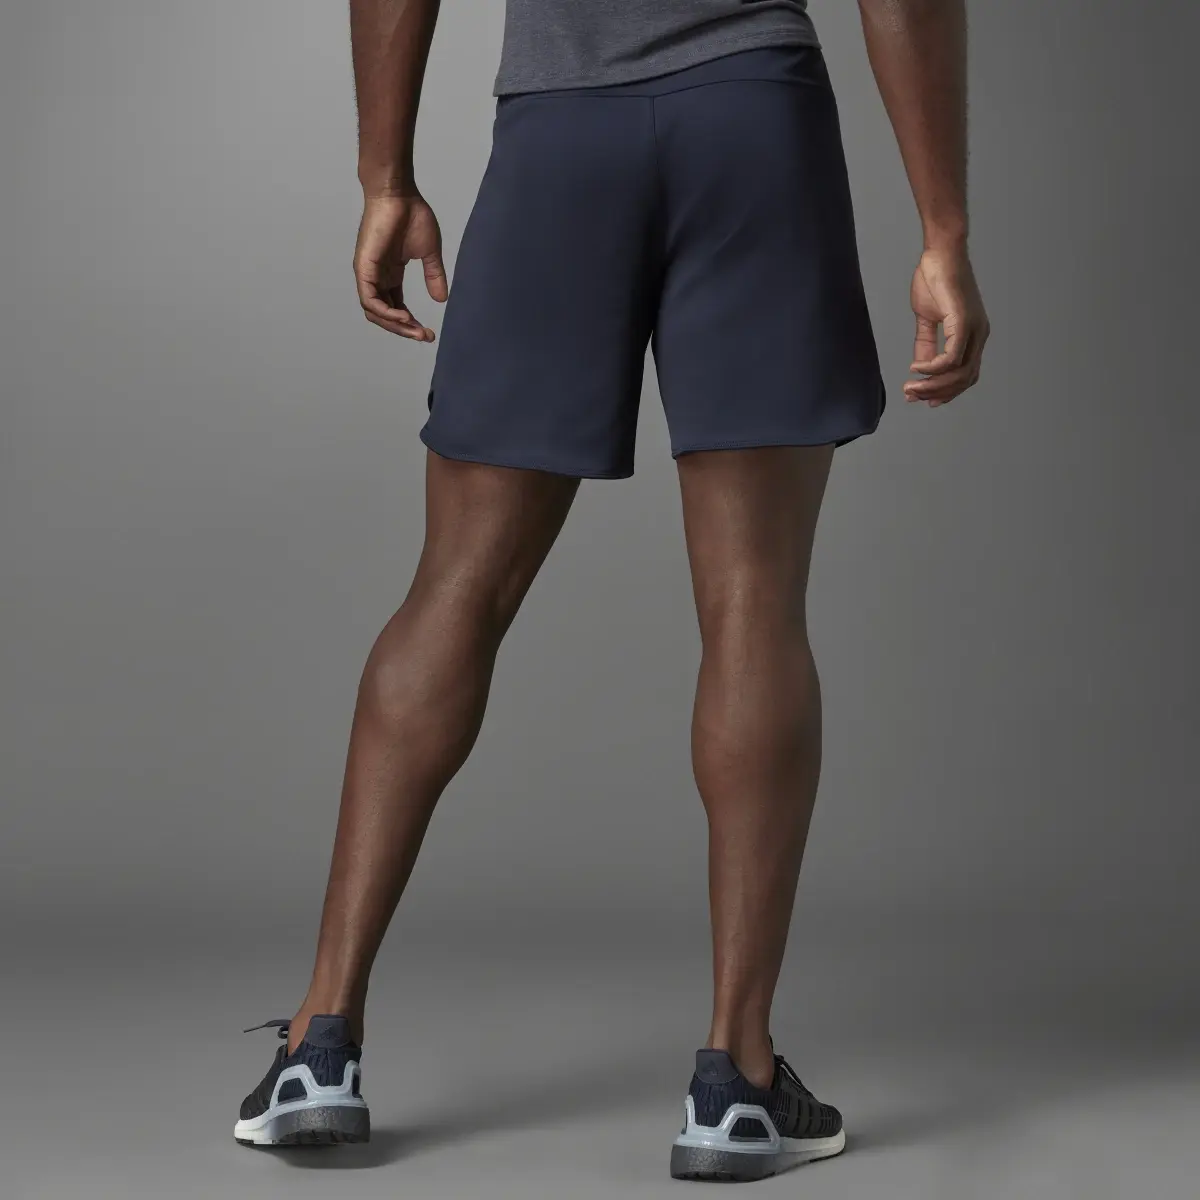 Adidas Short Designed for Training. 2